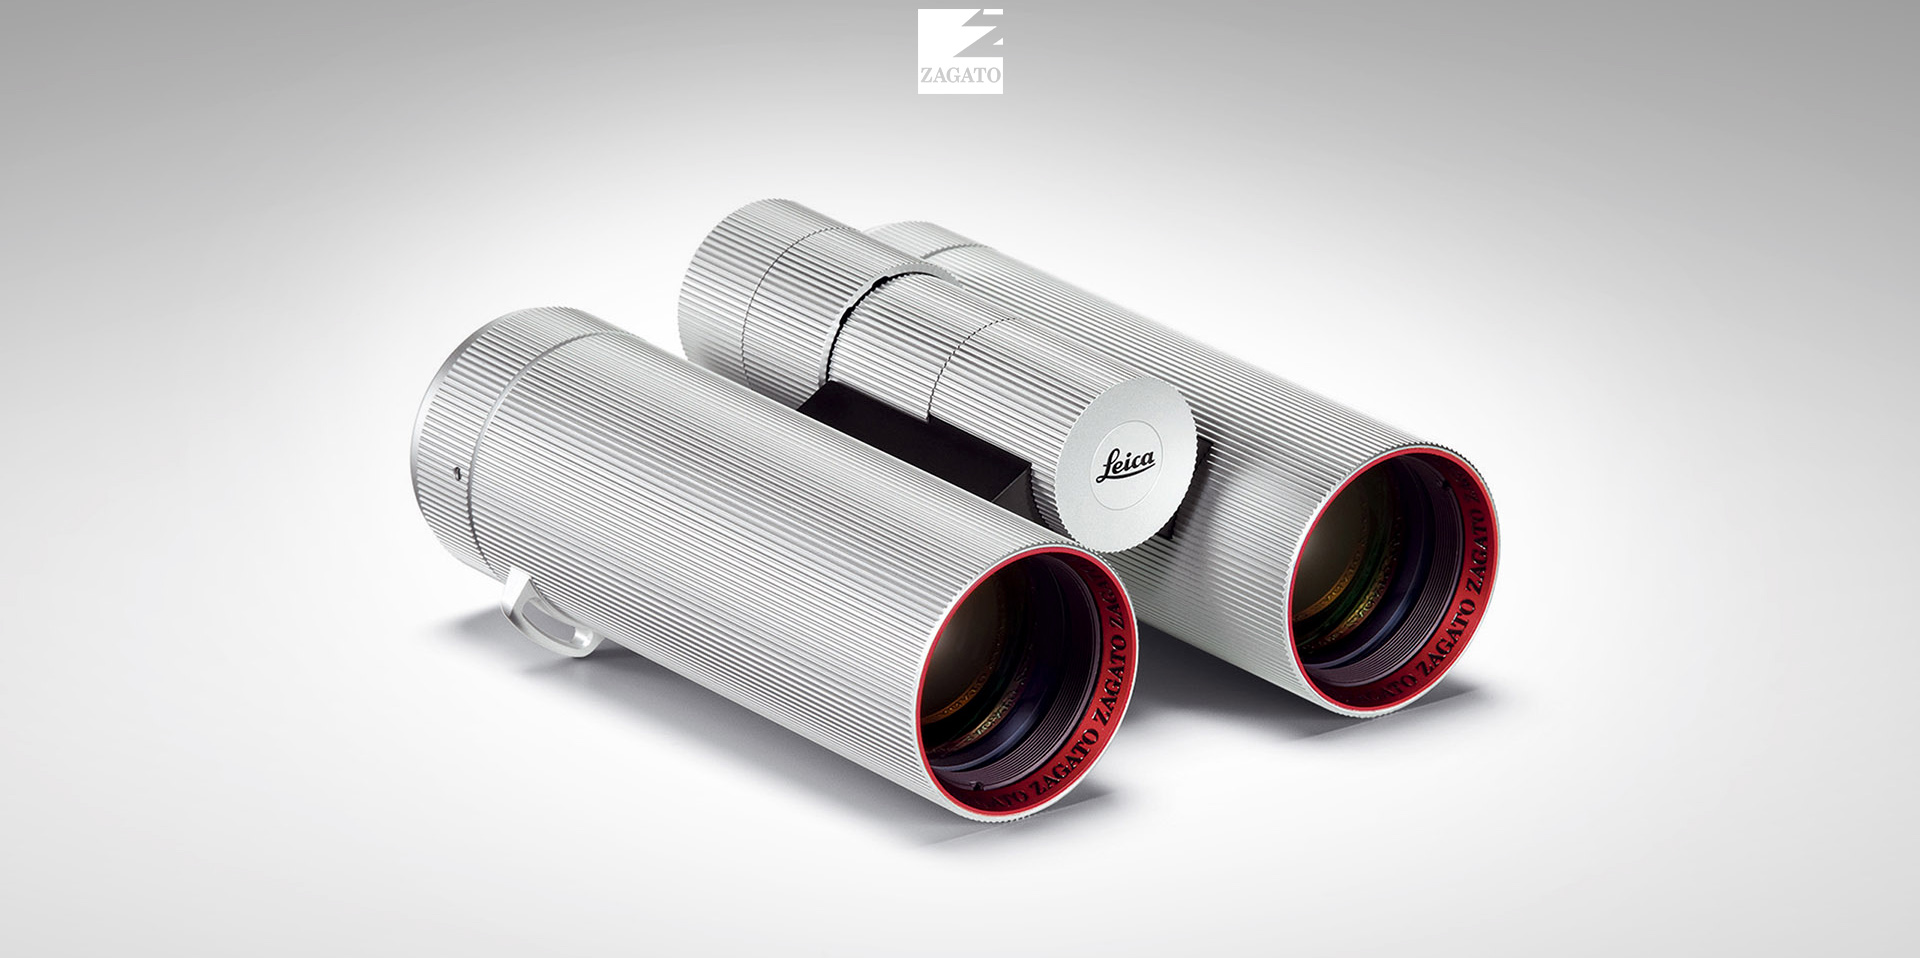 Leica-Ultravid-8x32-Edition-Zagato-4.jpg